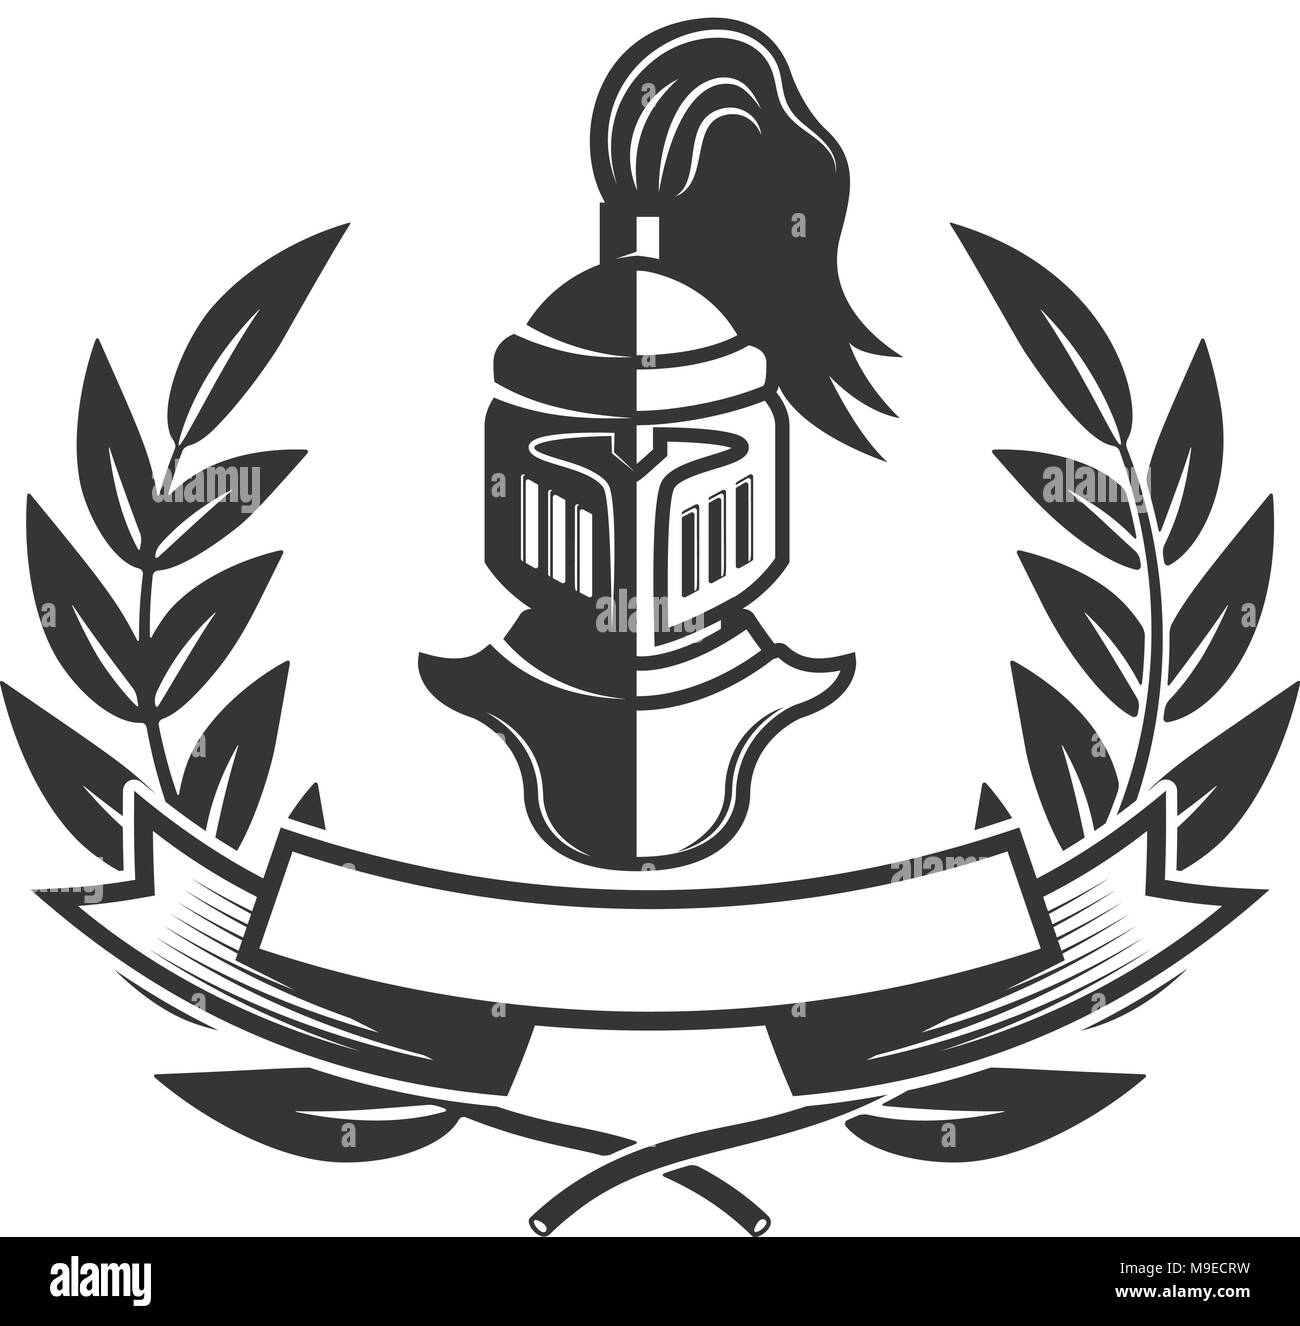 Knights. Emblem template with medieval knight helmet. Design element for logo, label, emblem, sign. Vector illustration Stock Vector